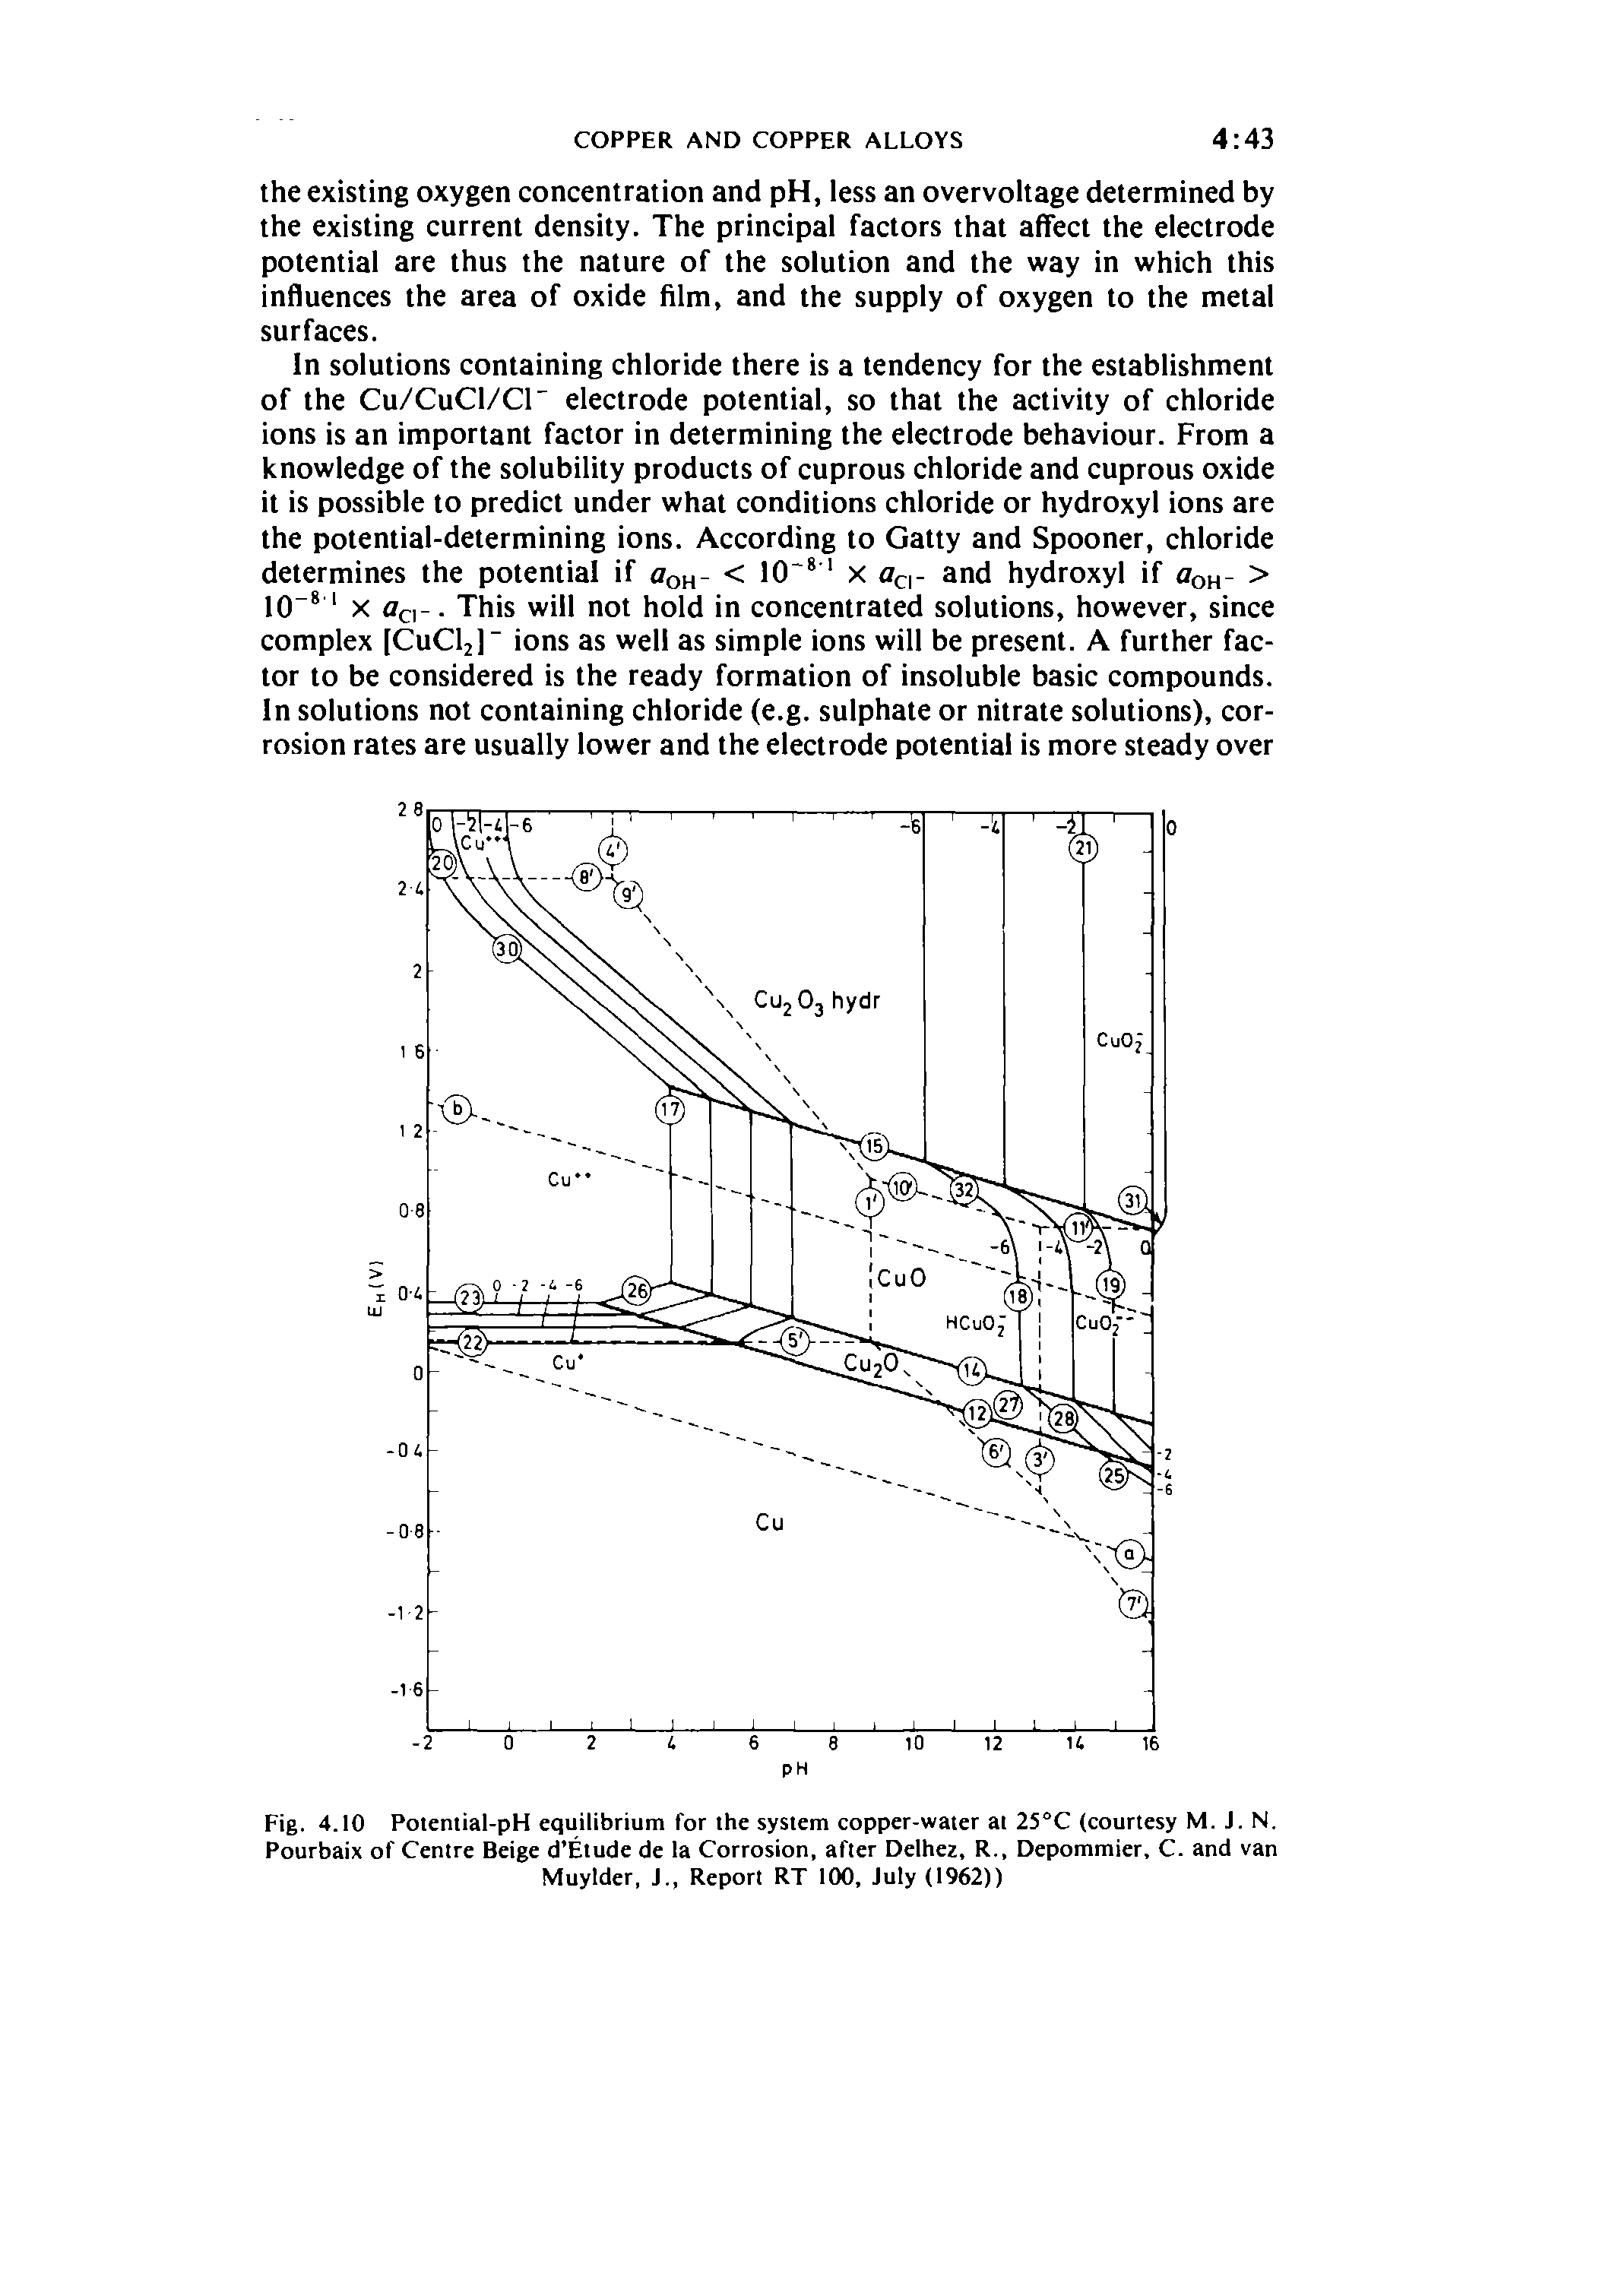 Fig. 4.10 Potential-pH equilibrium for the system copper-water at 25°C (courtesy M. J. N. Pourbaix of Centre Beige d Etude de la Corrosion, after Delhez, R., Depommier, C. and van Muylder, J., Report RT 1(X), July (1962))...